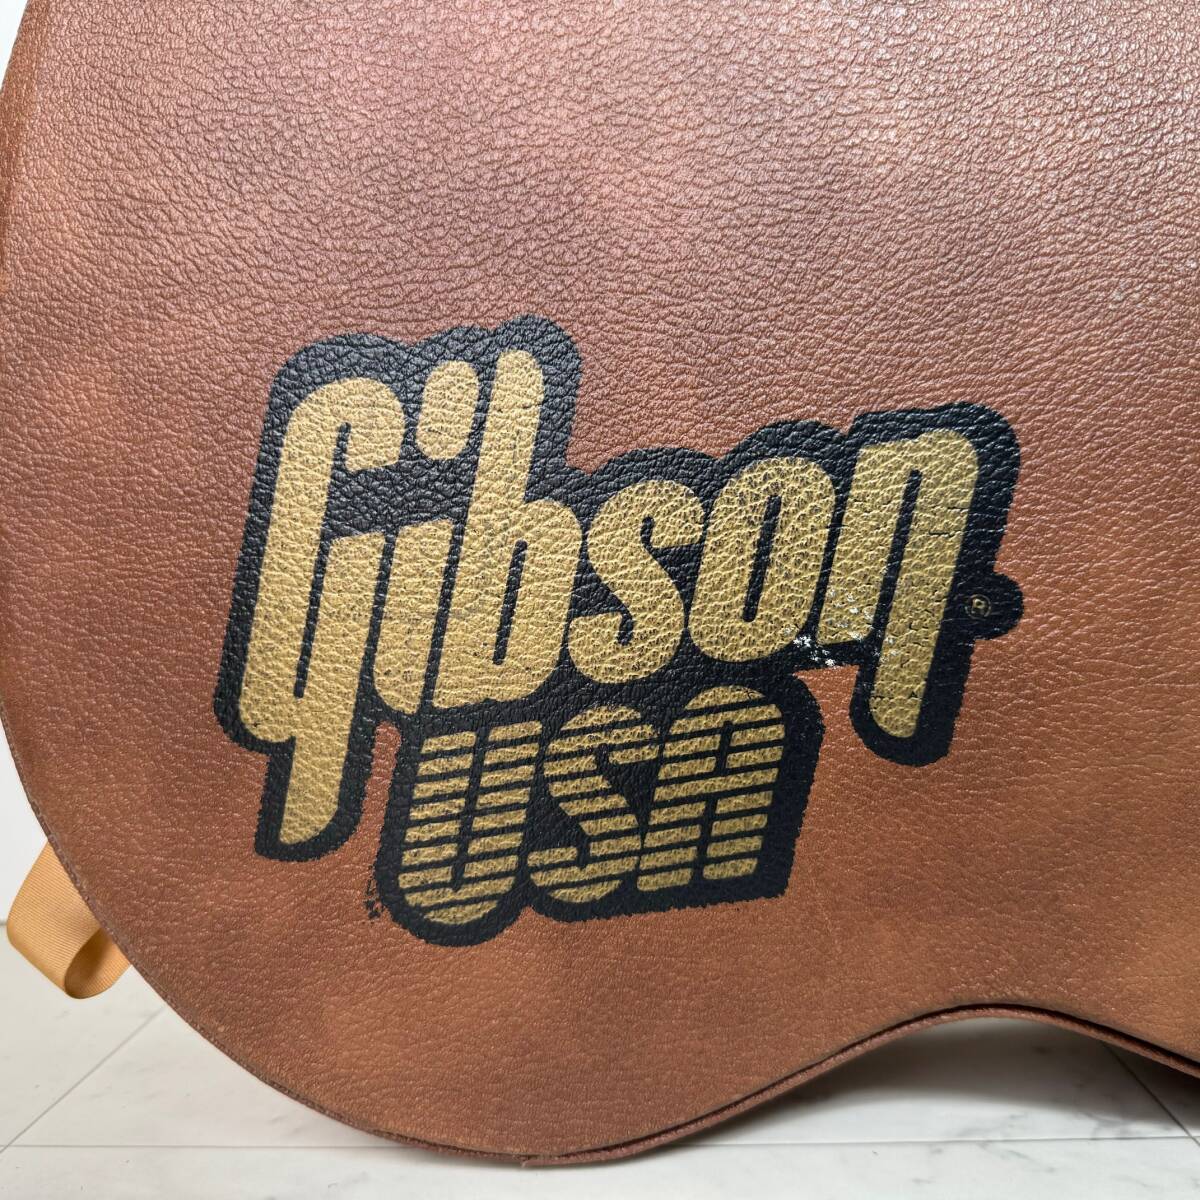 Gibson ギブソン SG 用 ハードケース Made in Canada カナダ製